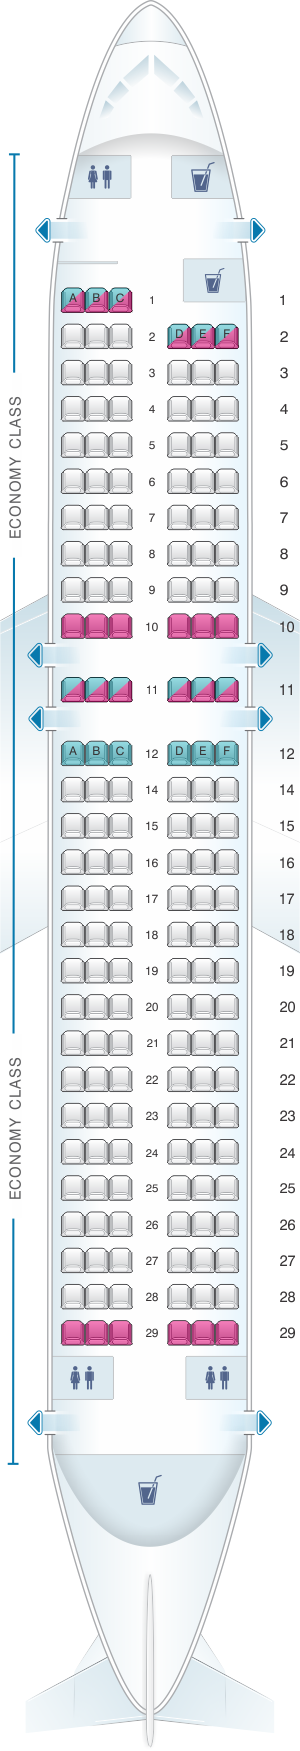 Seat map for Air France Airbus A320 Metropolitan V1